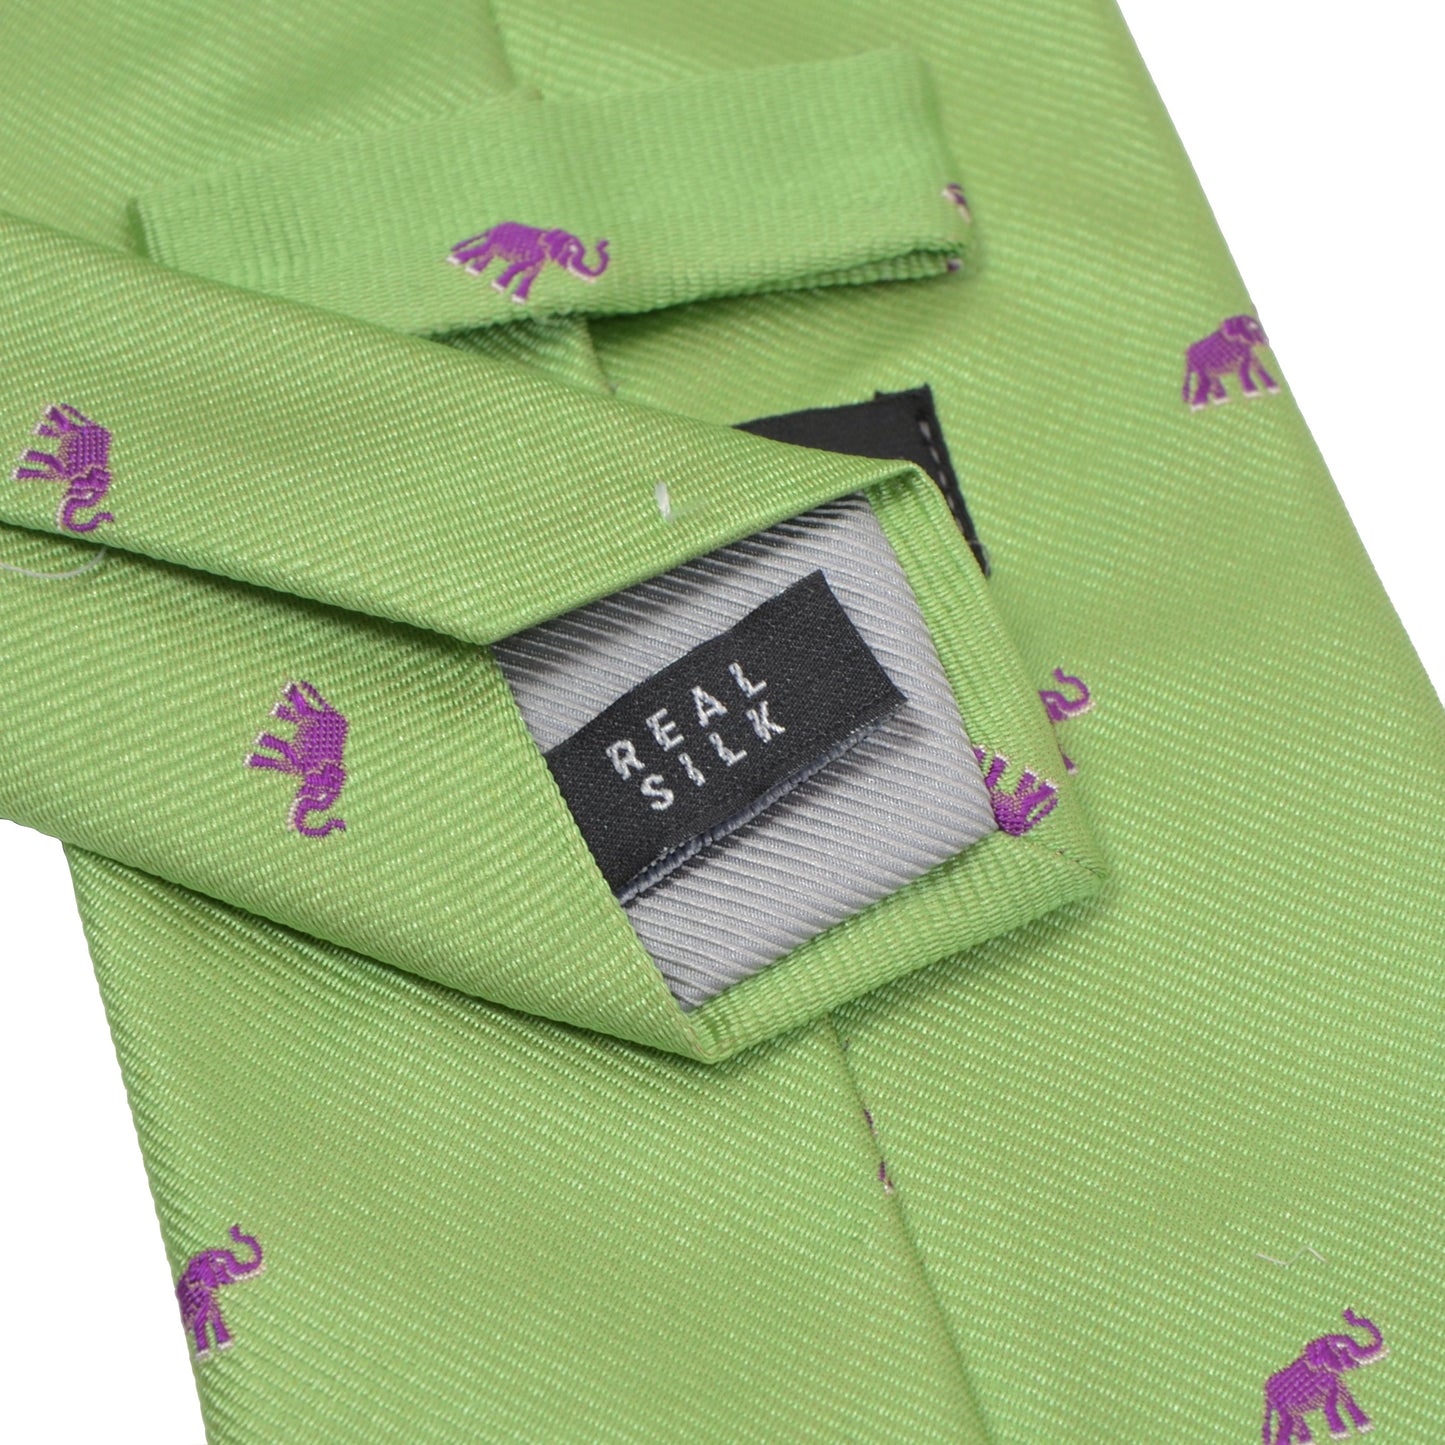 William Silk Elephant Tie -Green